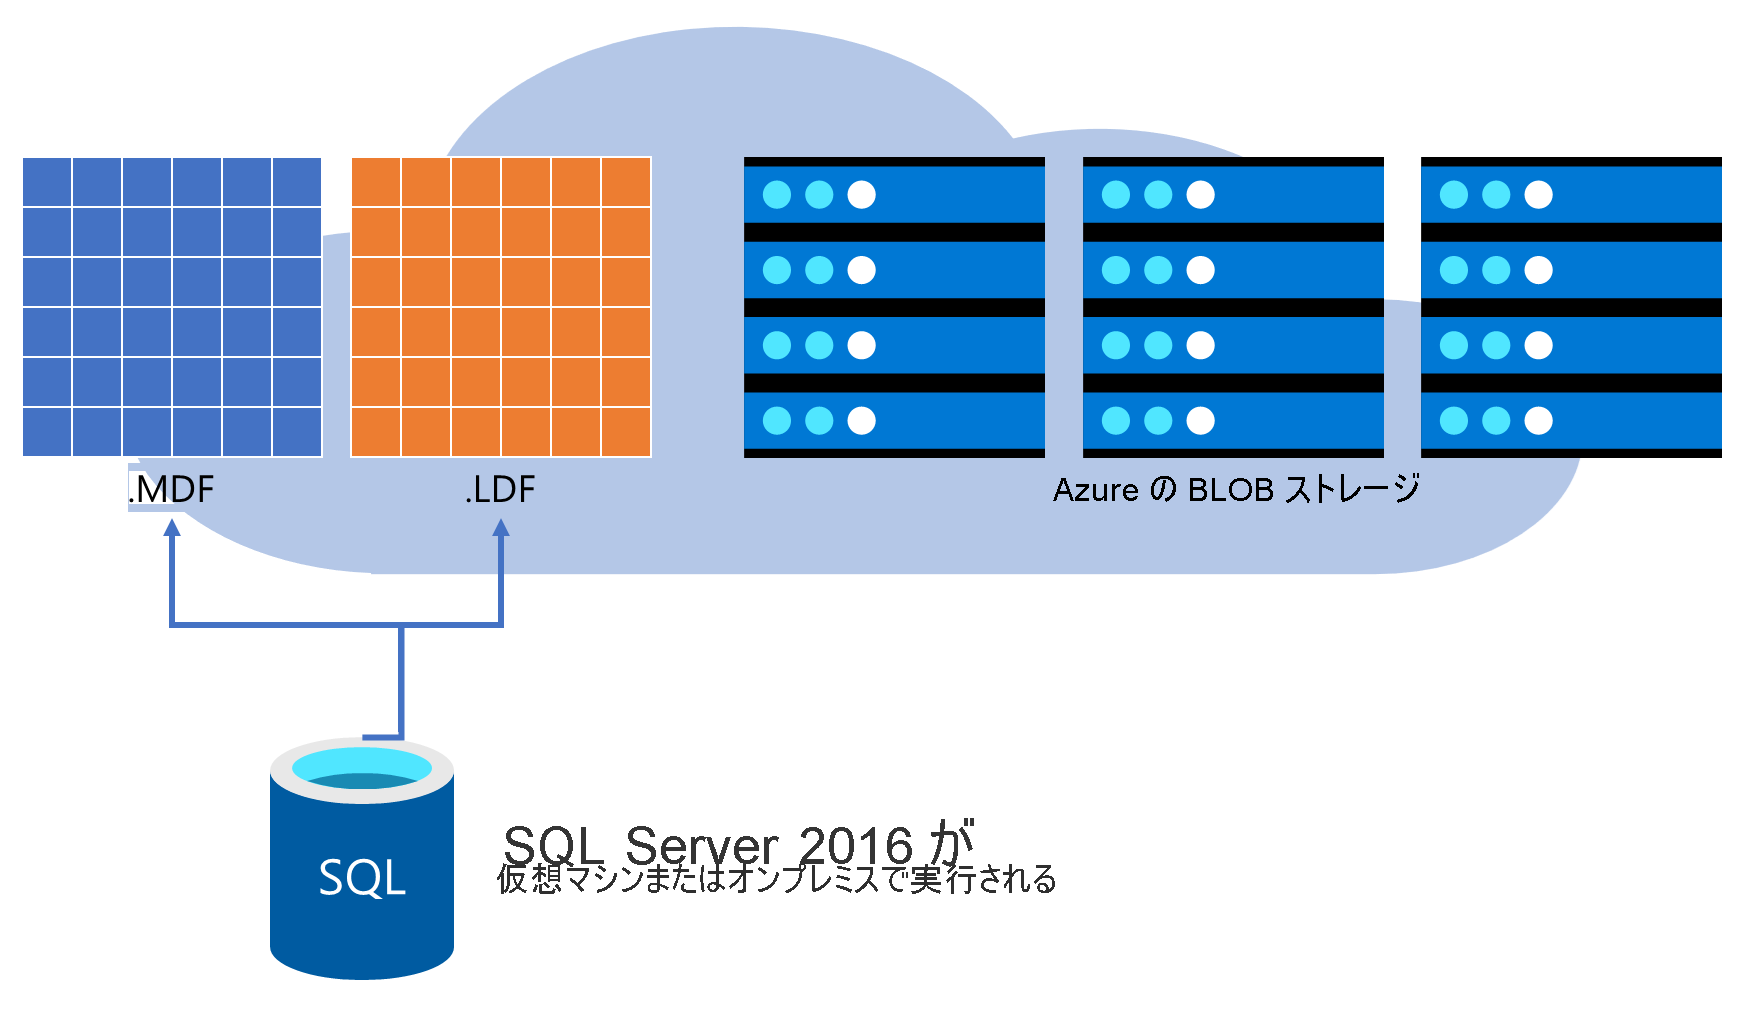 Azure Blob Storage にデータベース ファイルを直接格納しているダイアグラム。